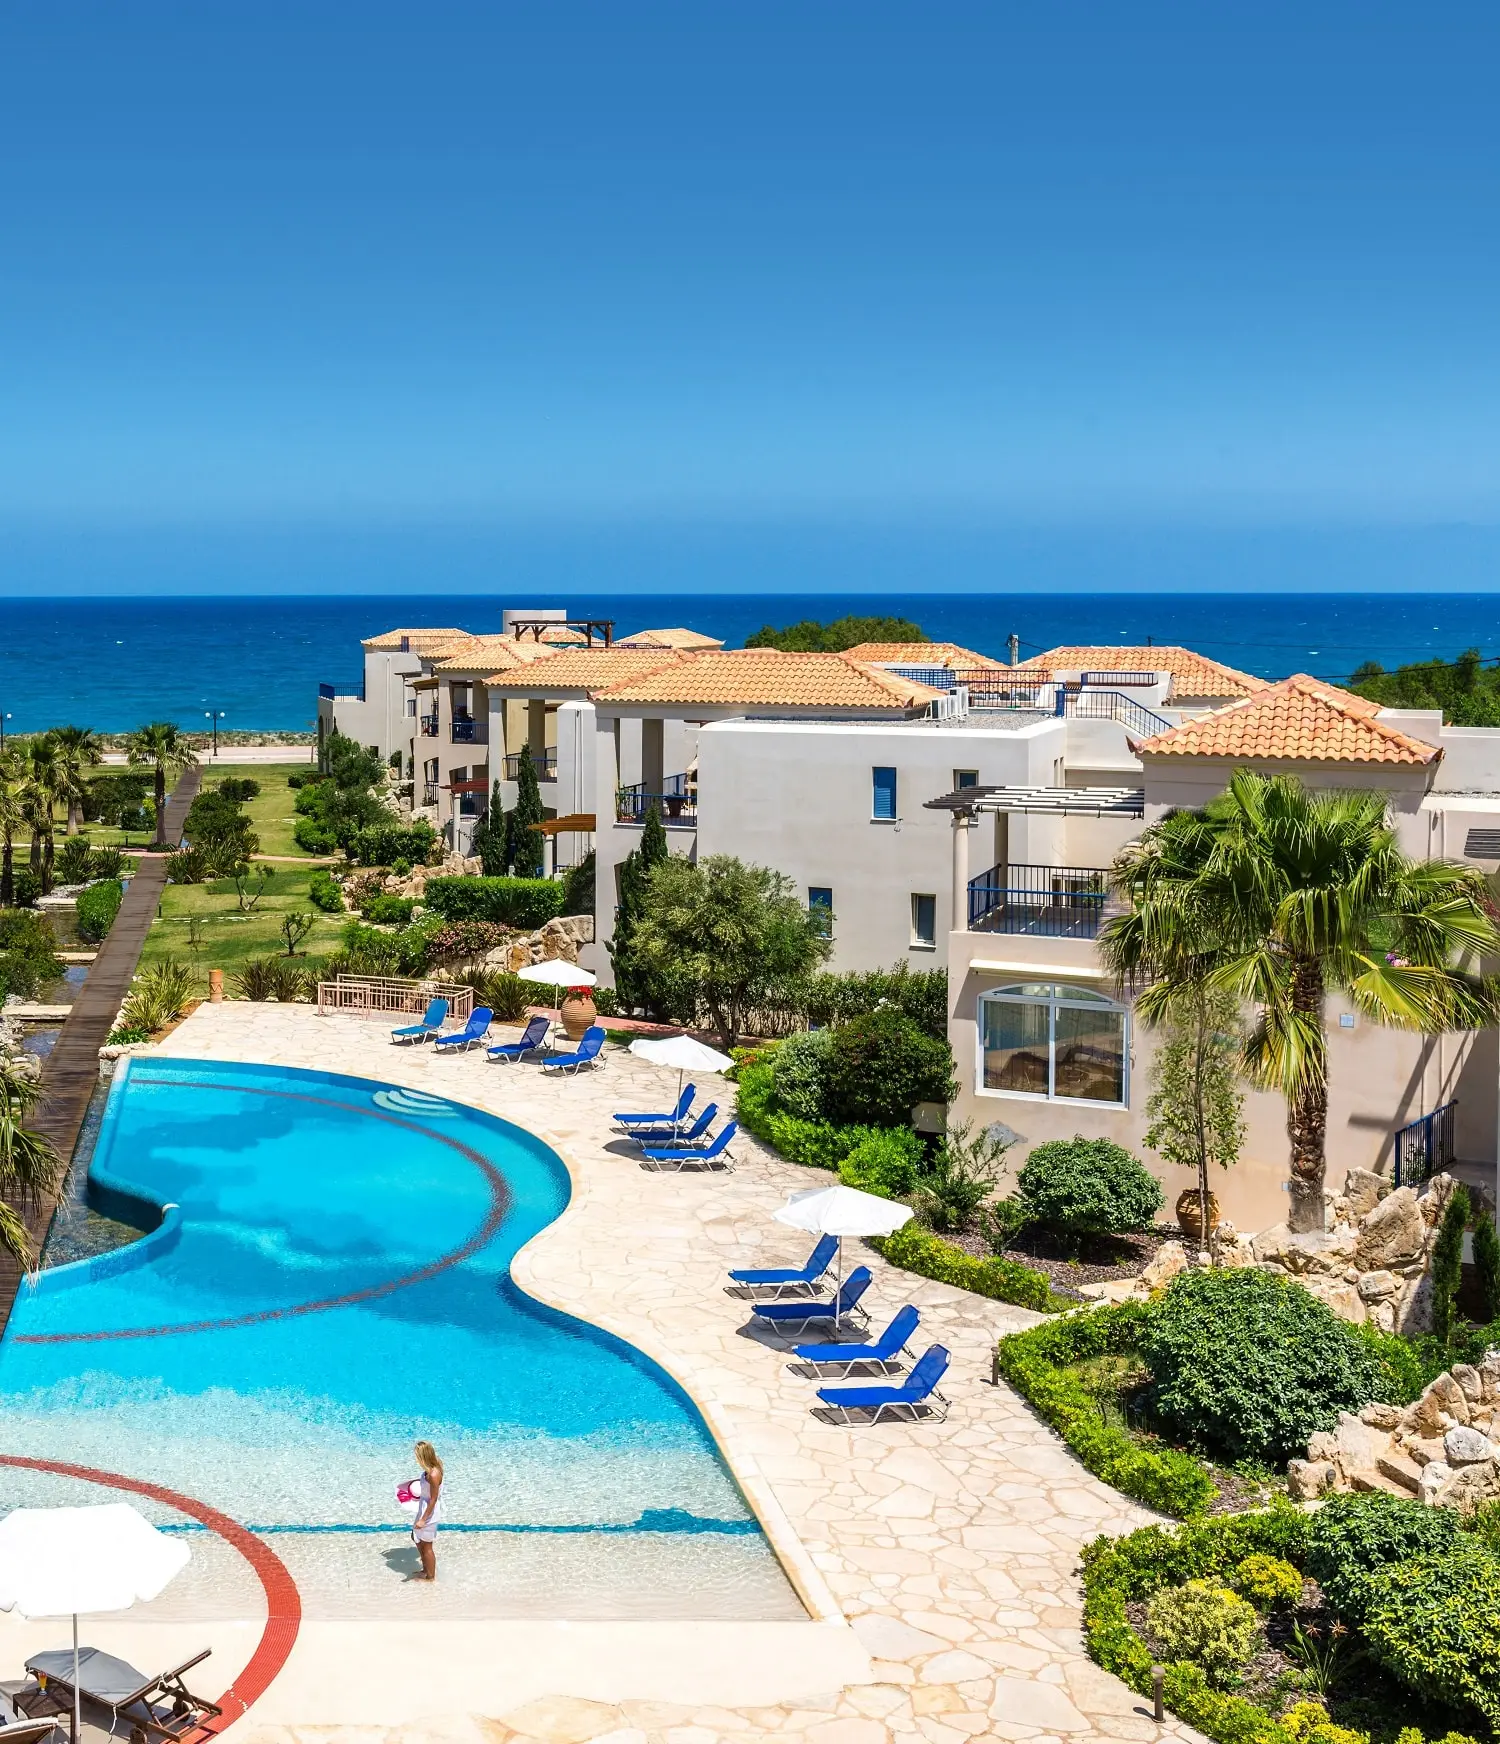 Acropolis Homes - Aphrodite Beachfront III - Real Estate Agency - Real Estate Photo - Estate Development